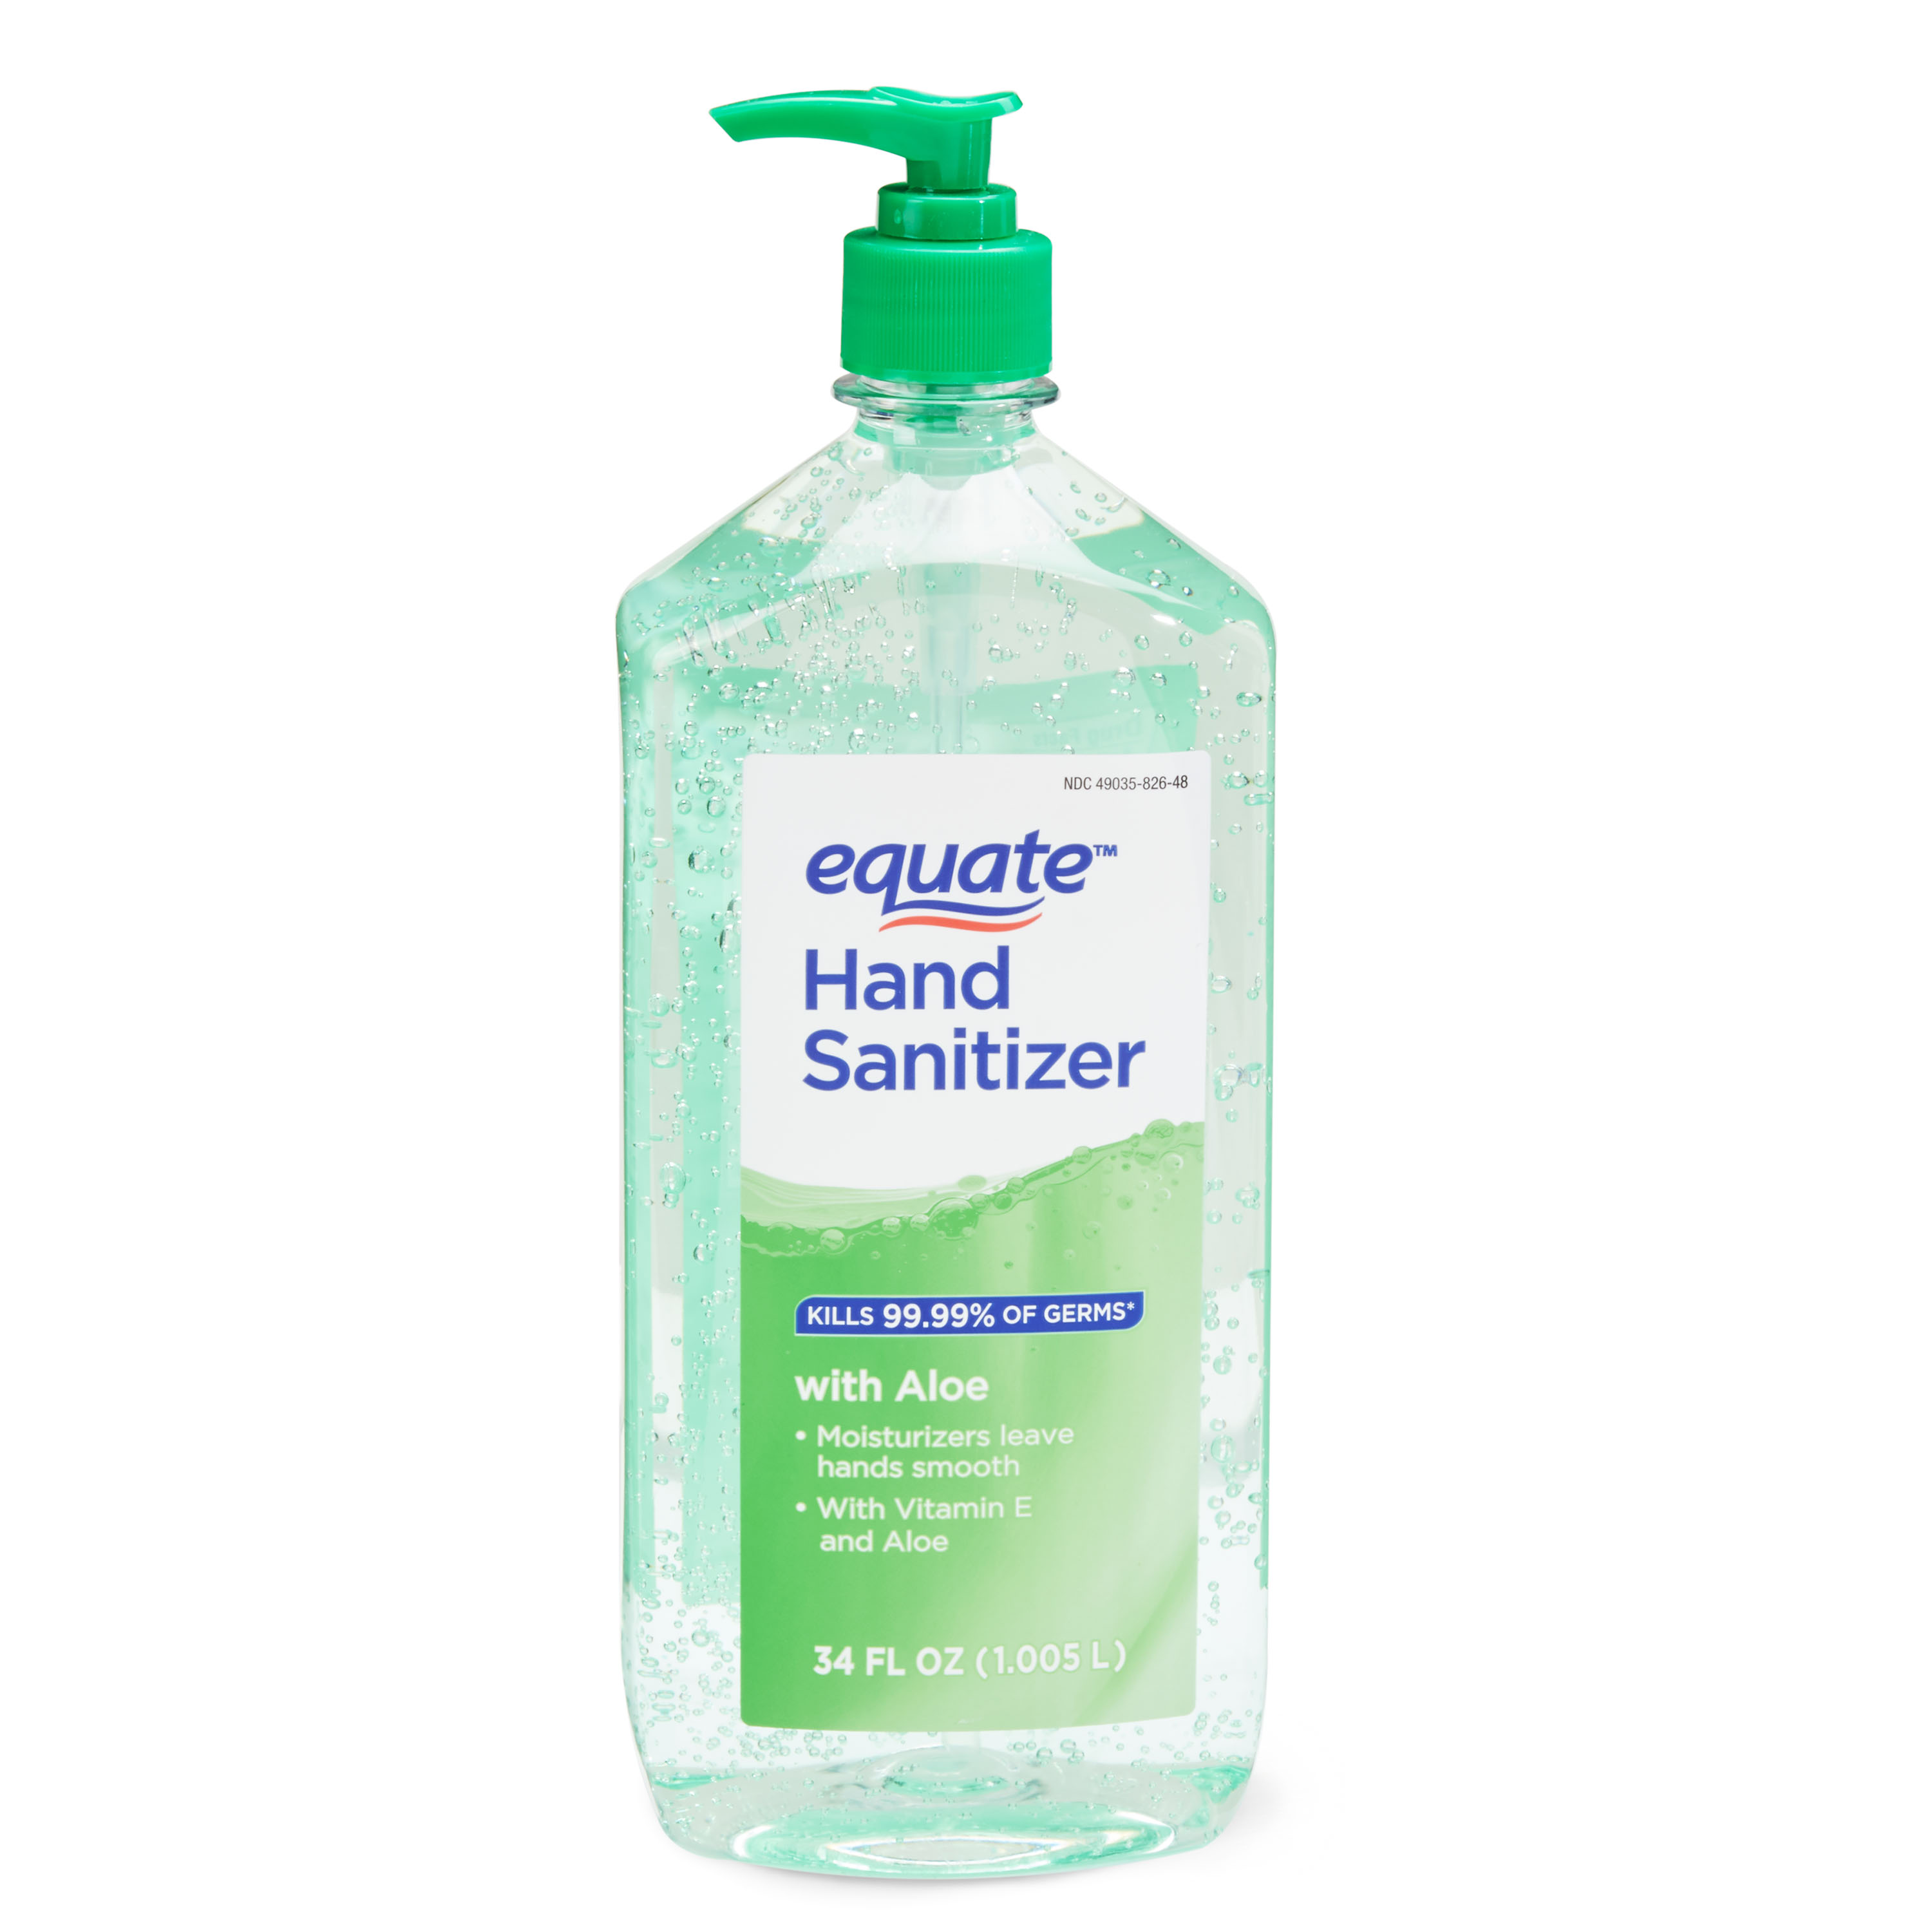 Equate Hand Sanitizer with Aloe, 34 fl oz - image 1 of 2